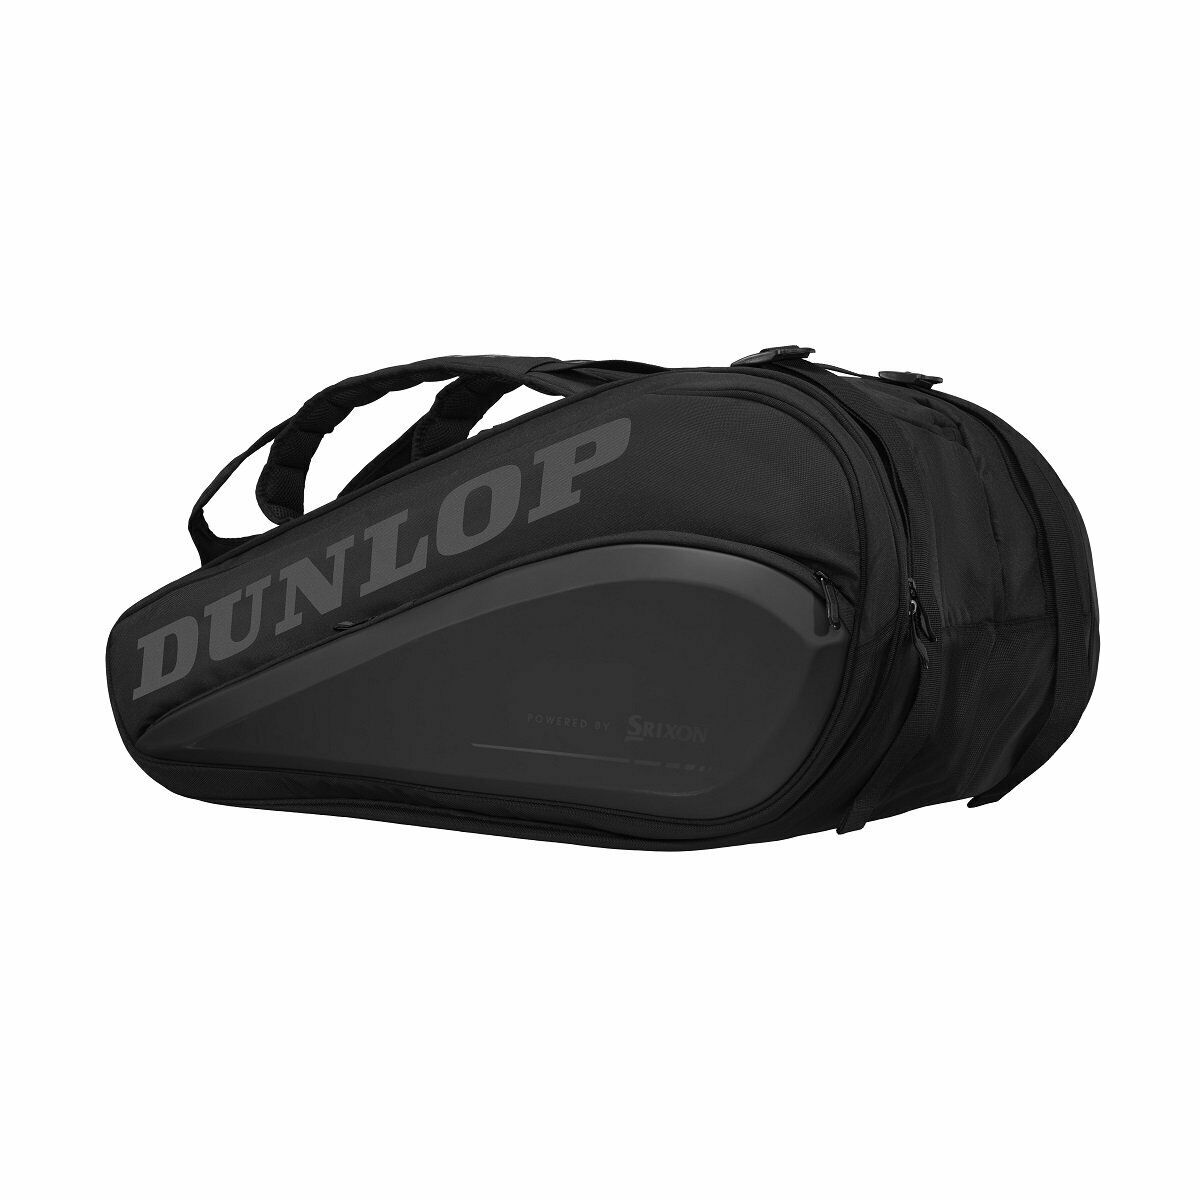 Dunlop CX Performance Thermo 9 Pack Tennis Bag (Black)